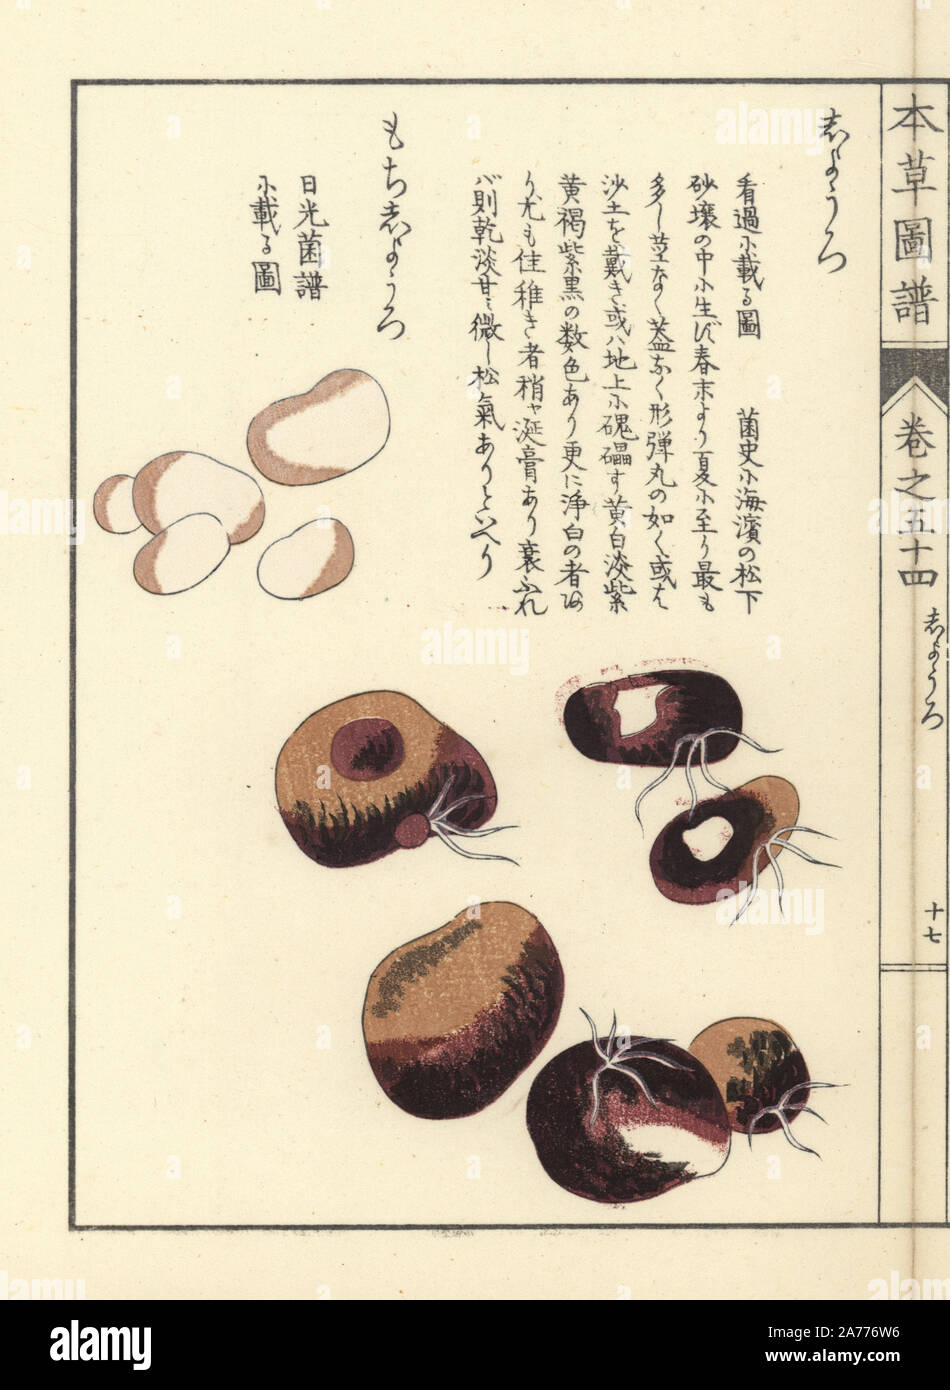 Shiyouro and mochi shiyouro mushrooms, Rhizopogon rubescens. Handcoloured woodblock print from Iwasaki Kan'en's 'Honzo Zufu' (Illustrated Guide to Plants), Japan, 1916. Stock Photo